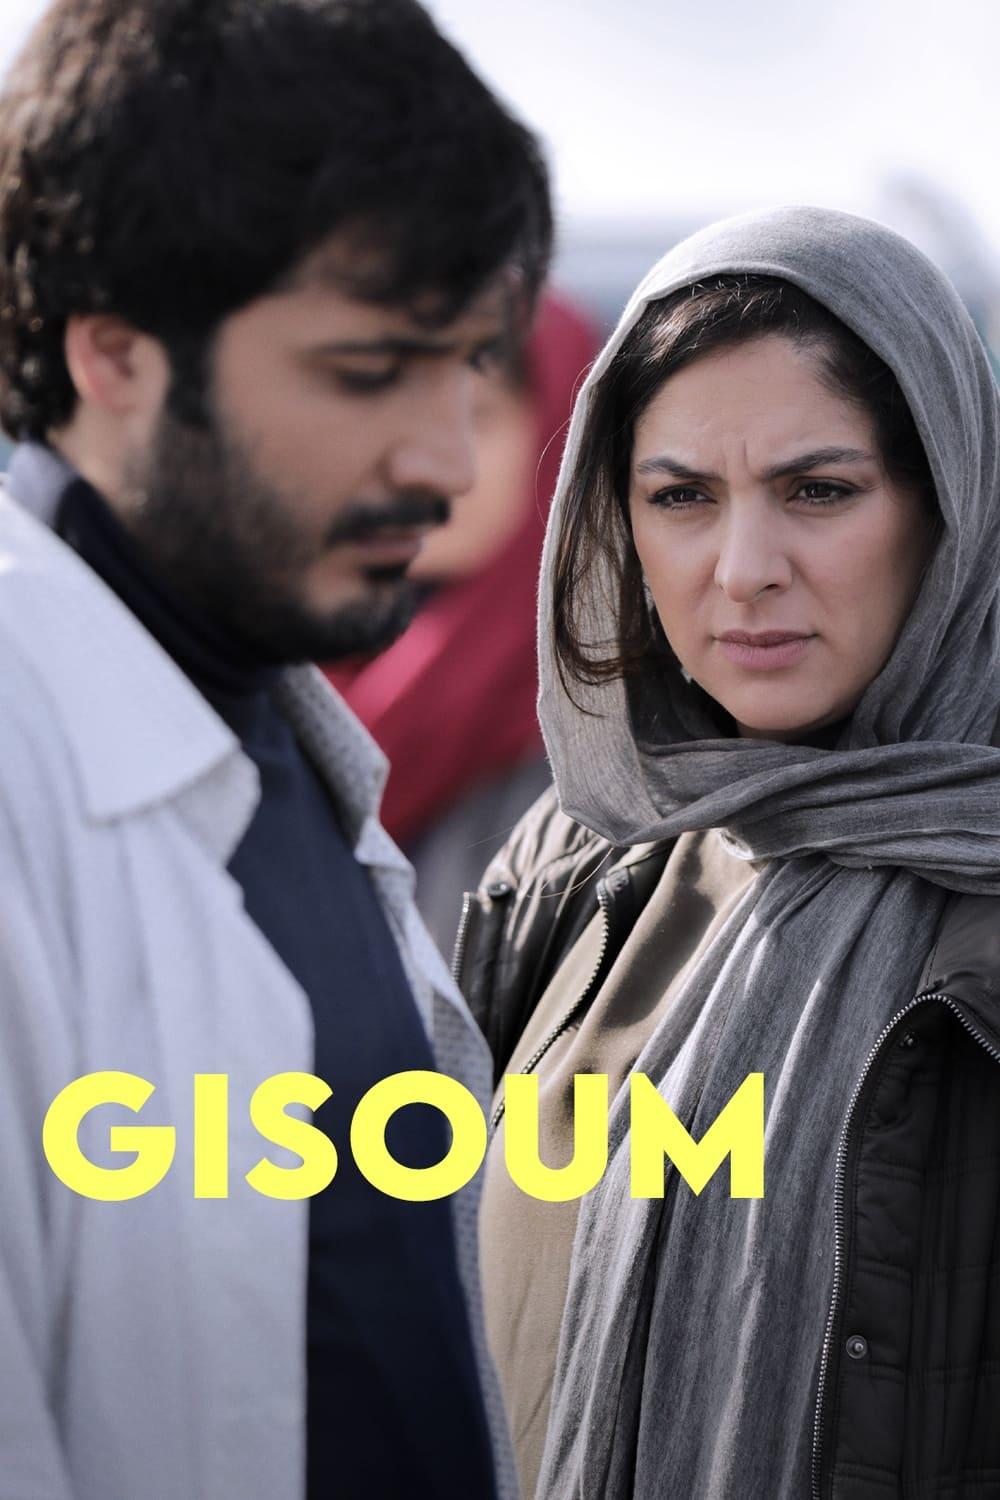 Gisoum poster